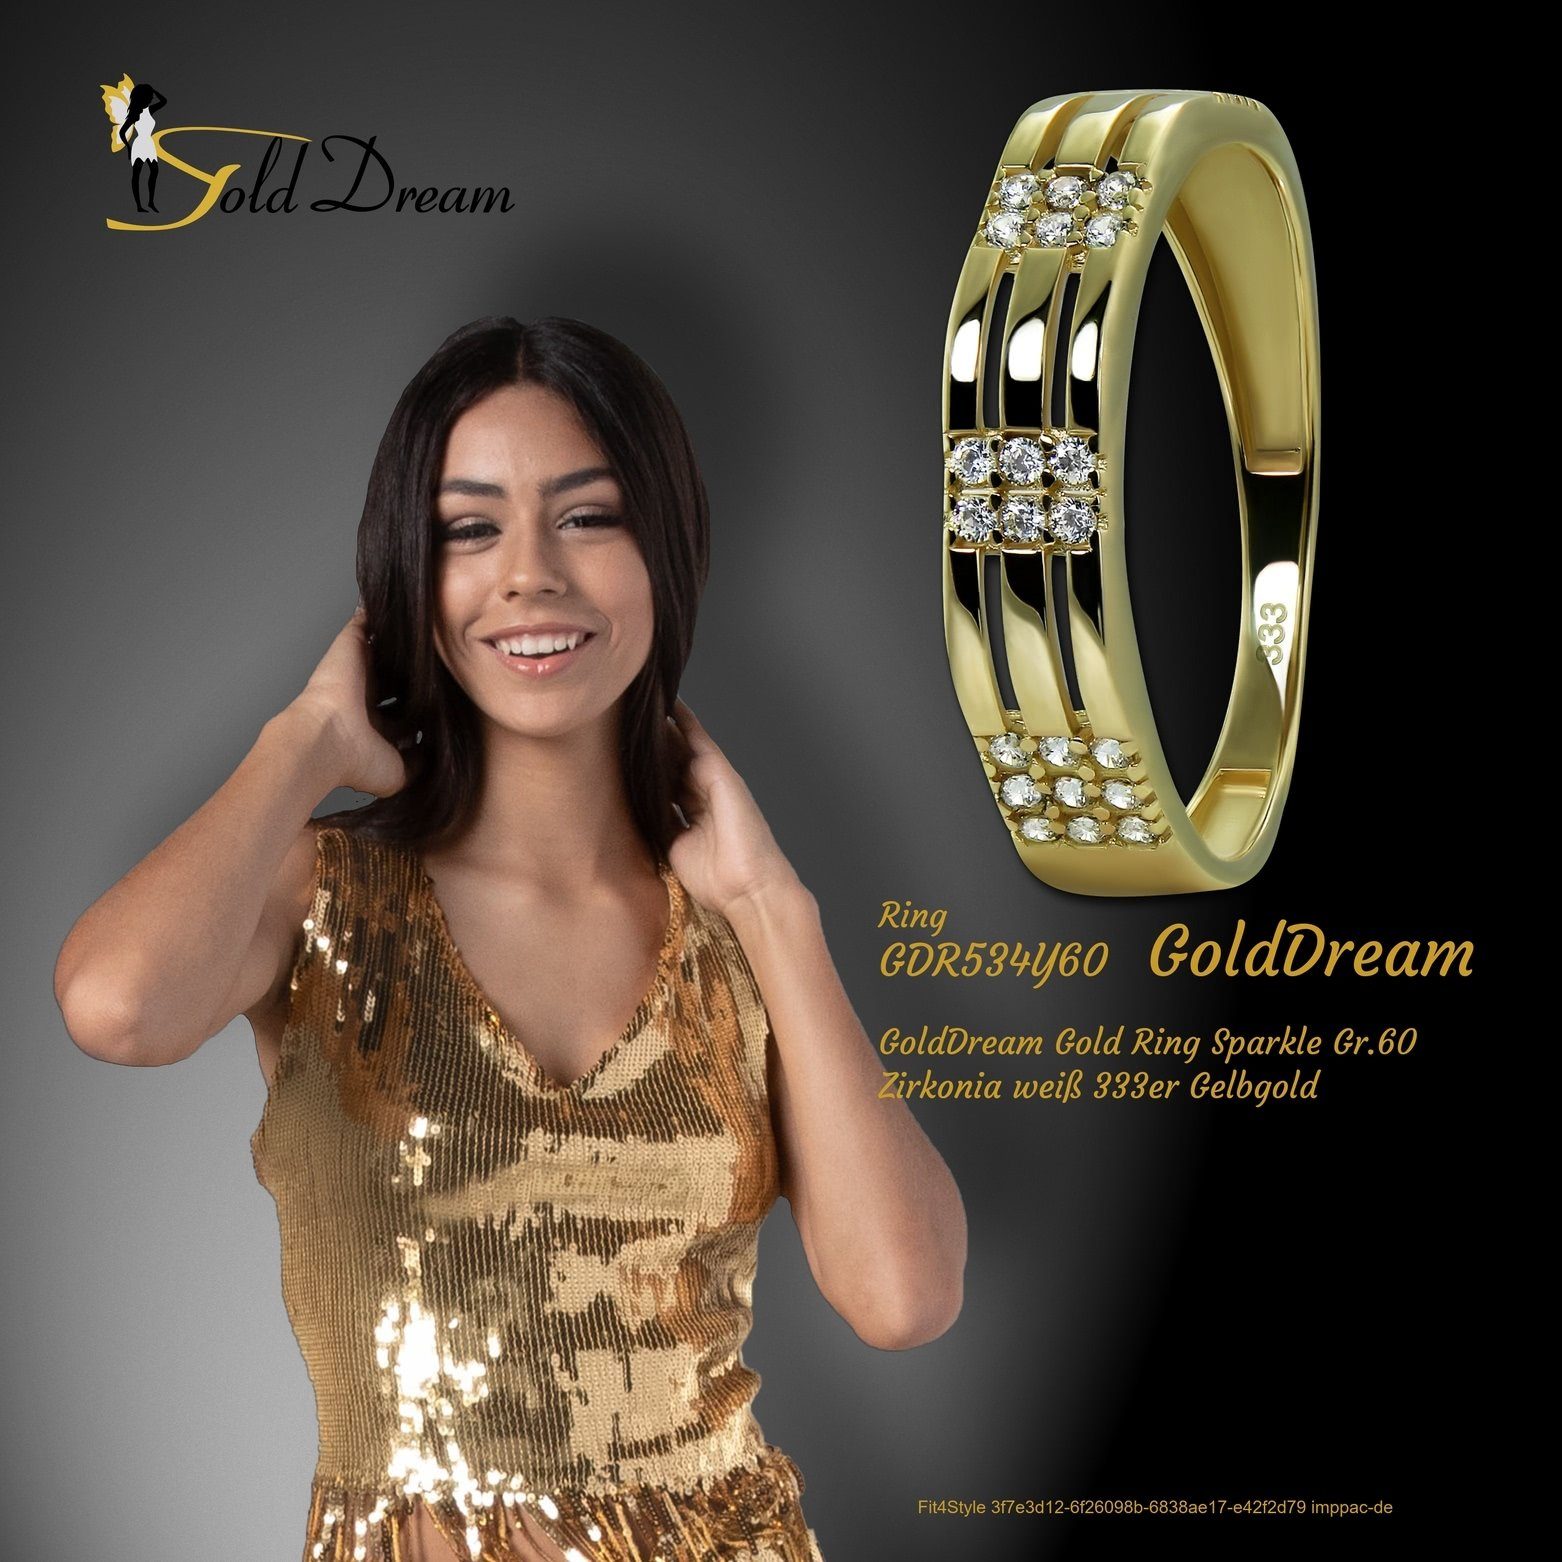 GoldDream Goldring - GoldDream Karat, Farbe: gold, (Fingerring), Ring weiß Sparkle Ring Gold Gr.60 Gelbgold Sparkle 333 8 Damen